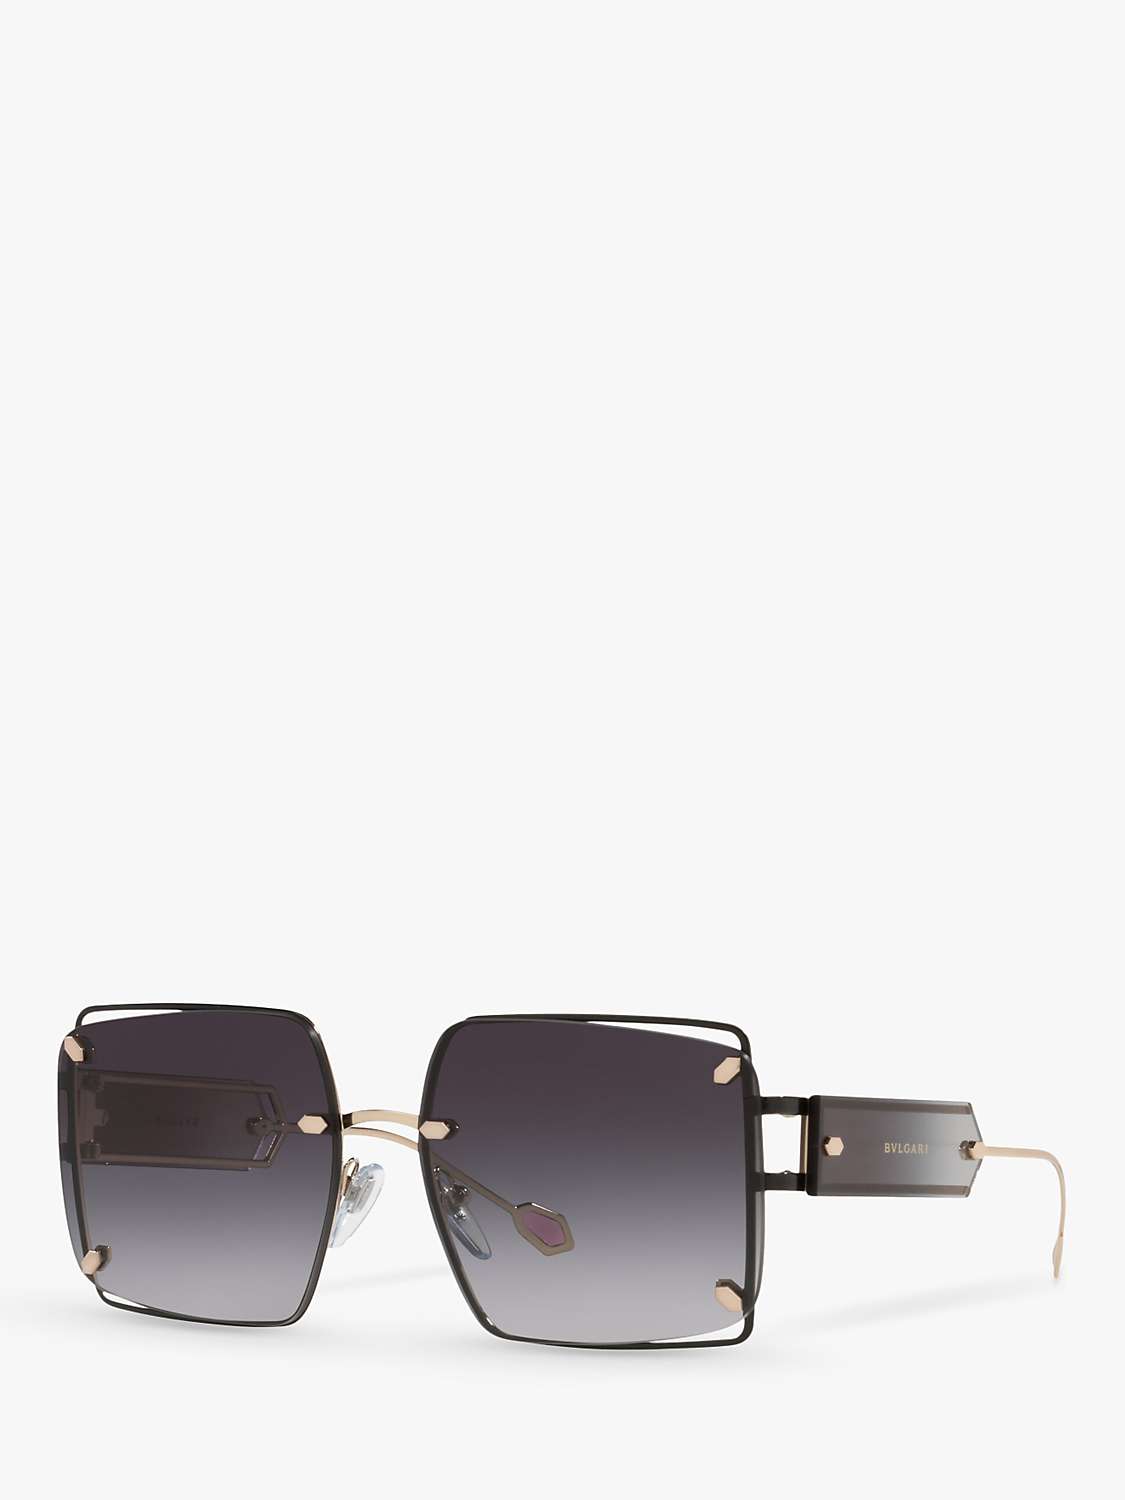 Buy BVLGARI BV6171 Women's Squared Sunglasses, Black/Pink Gold Online at johnlewis.com